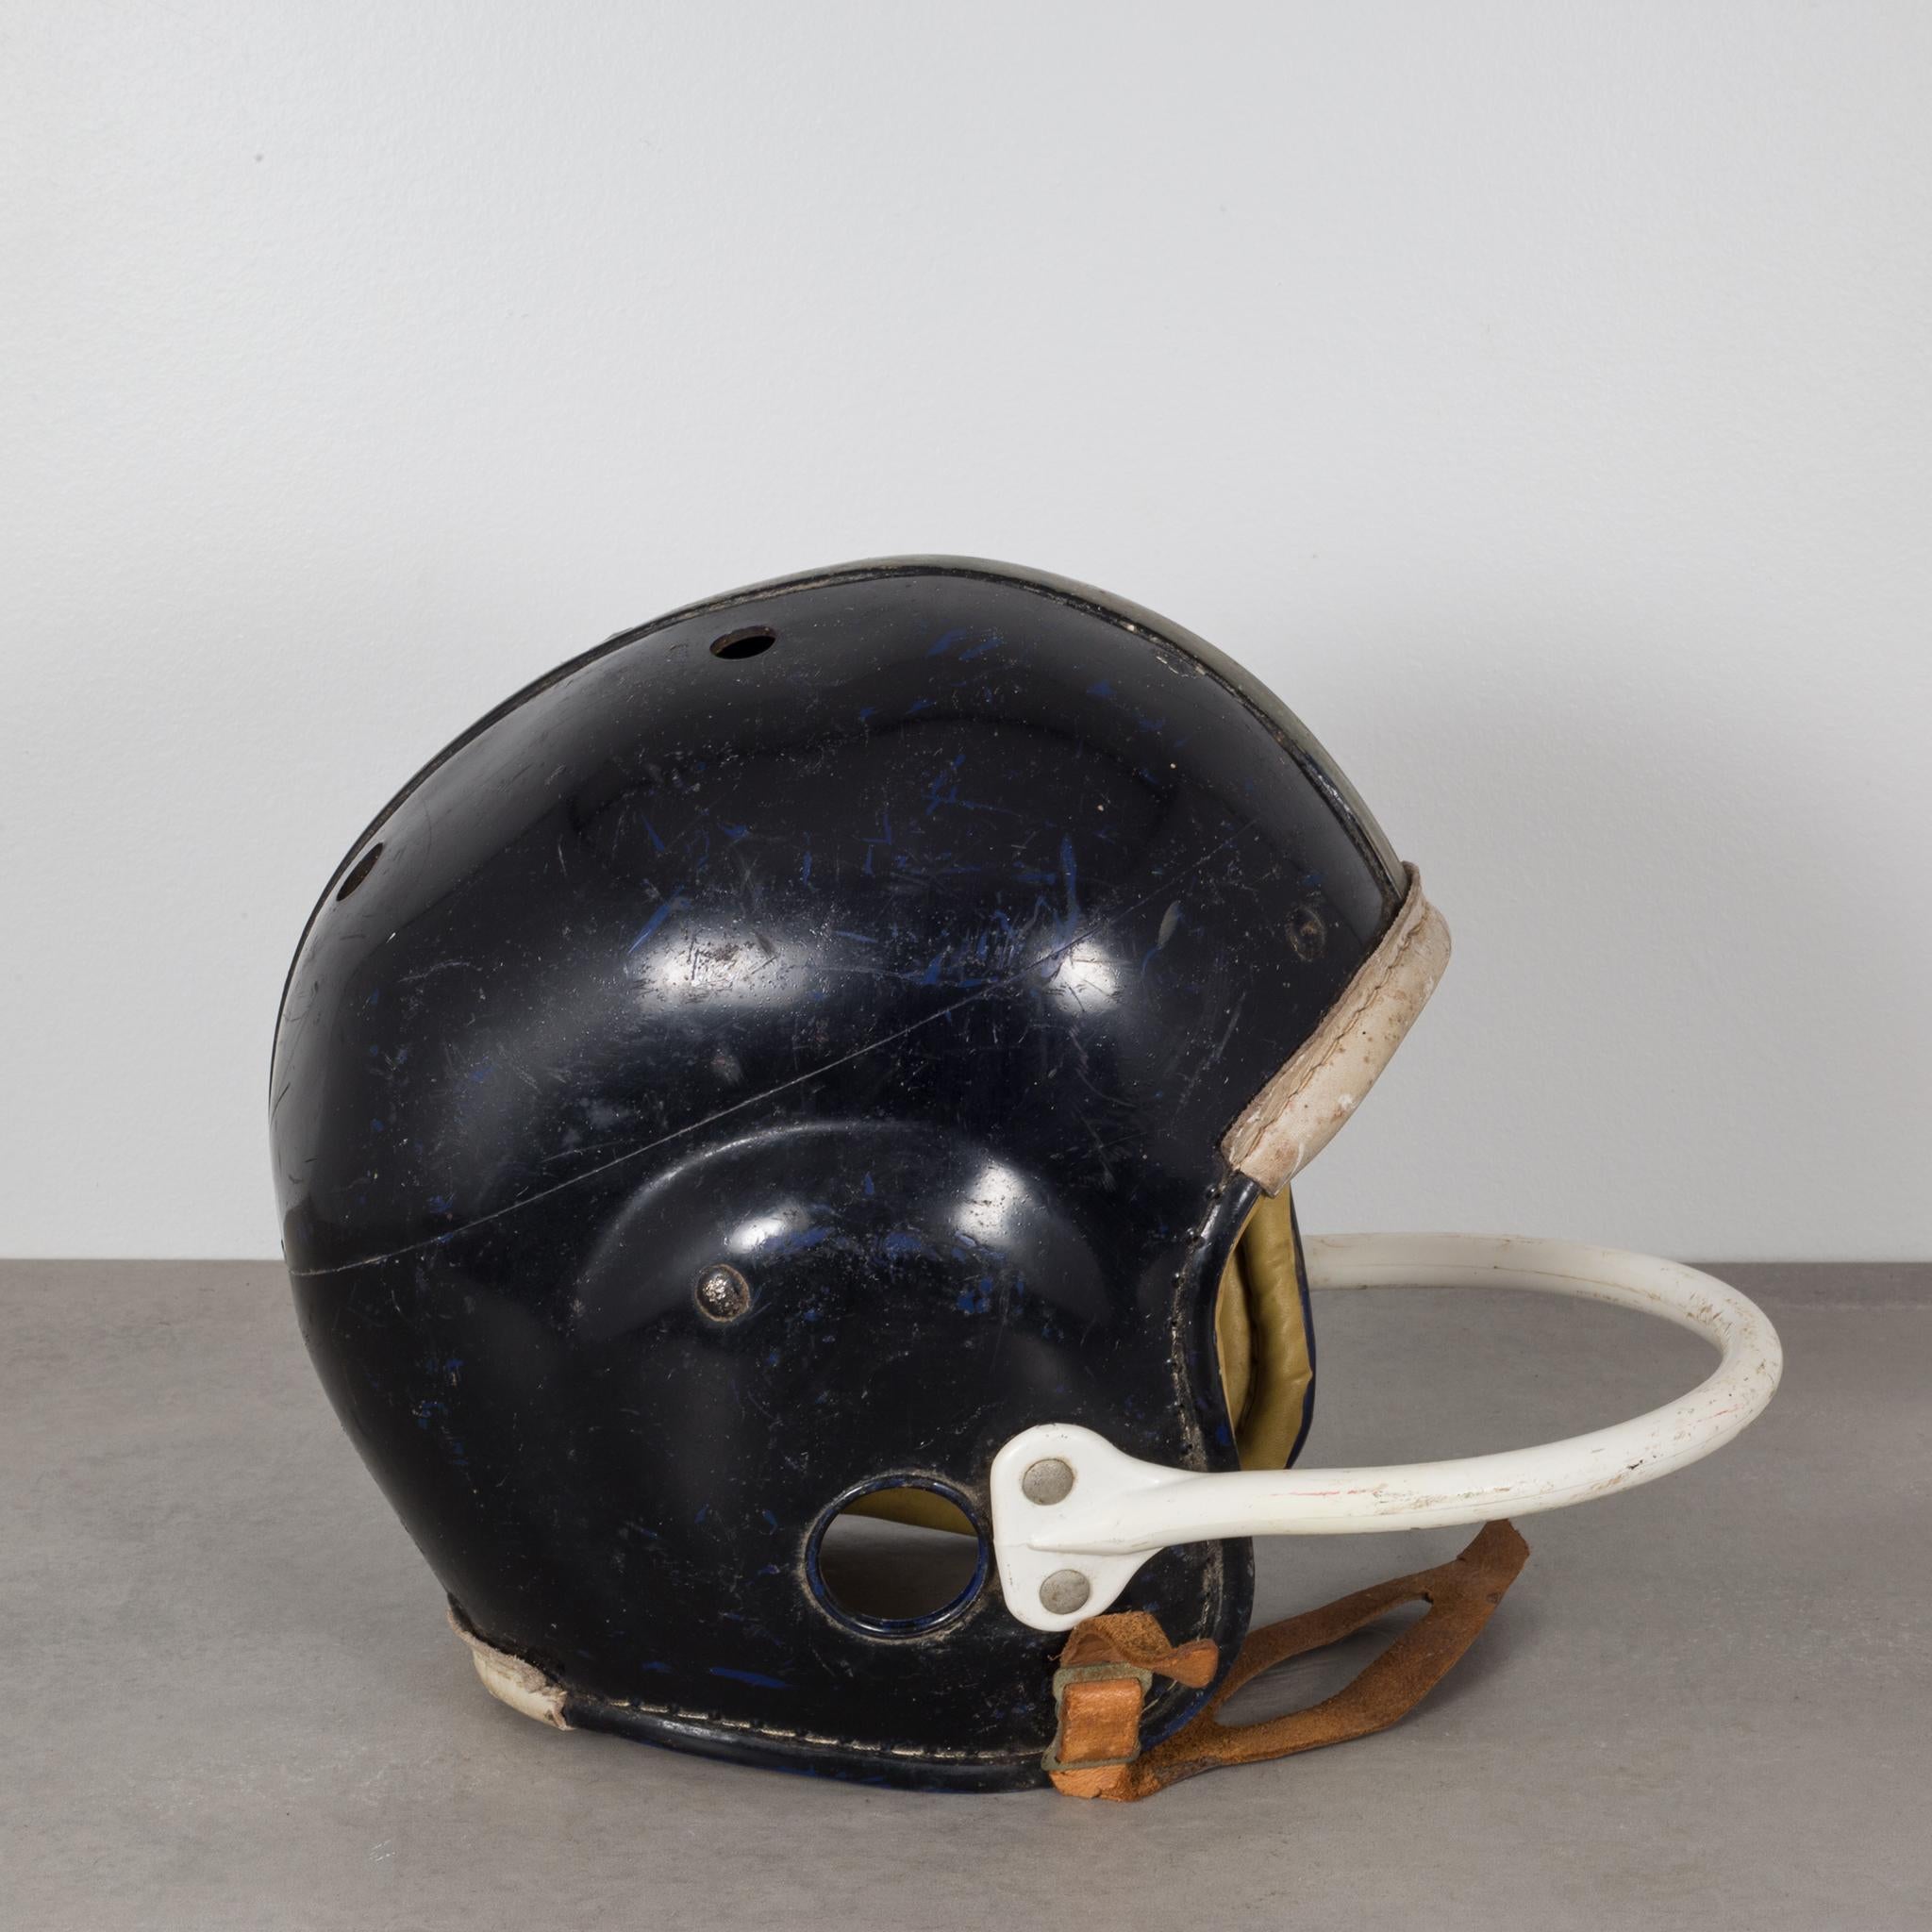 Industrial Vintage Football Helmet, circa 1950